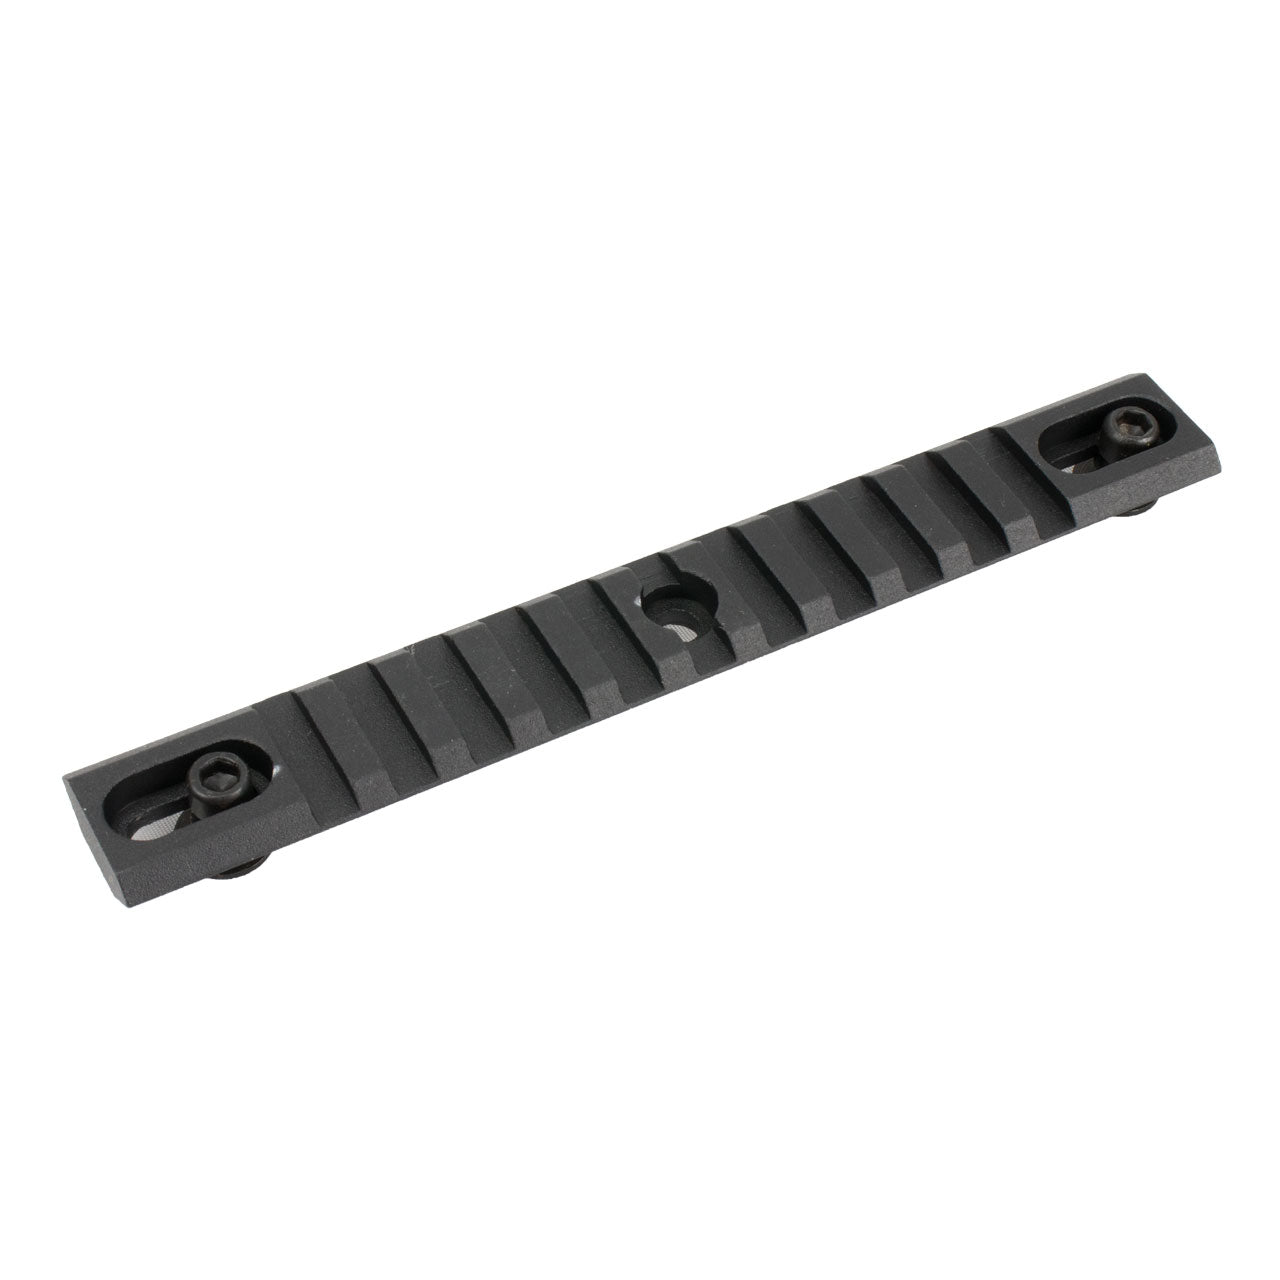 AIM Sports 20mm Accessory Rail for Keymod Handguards (11 slot)